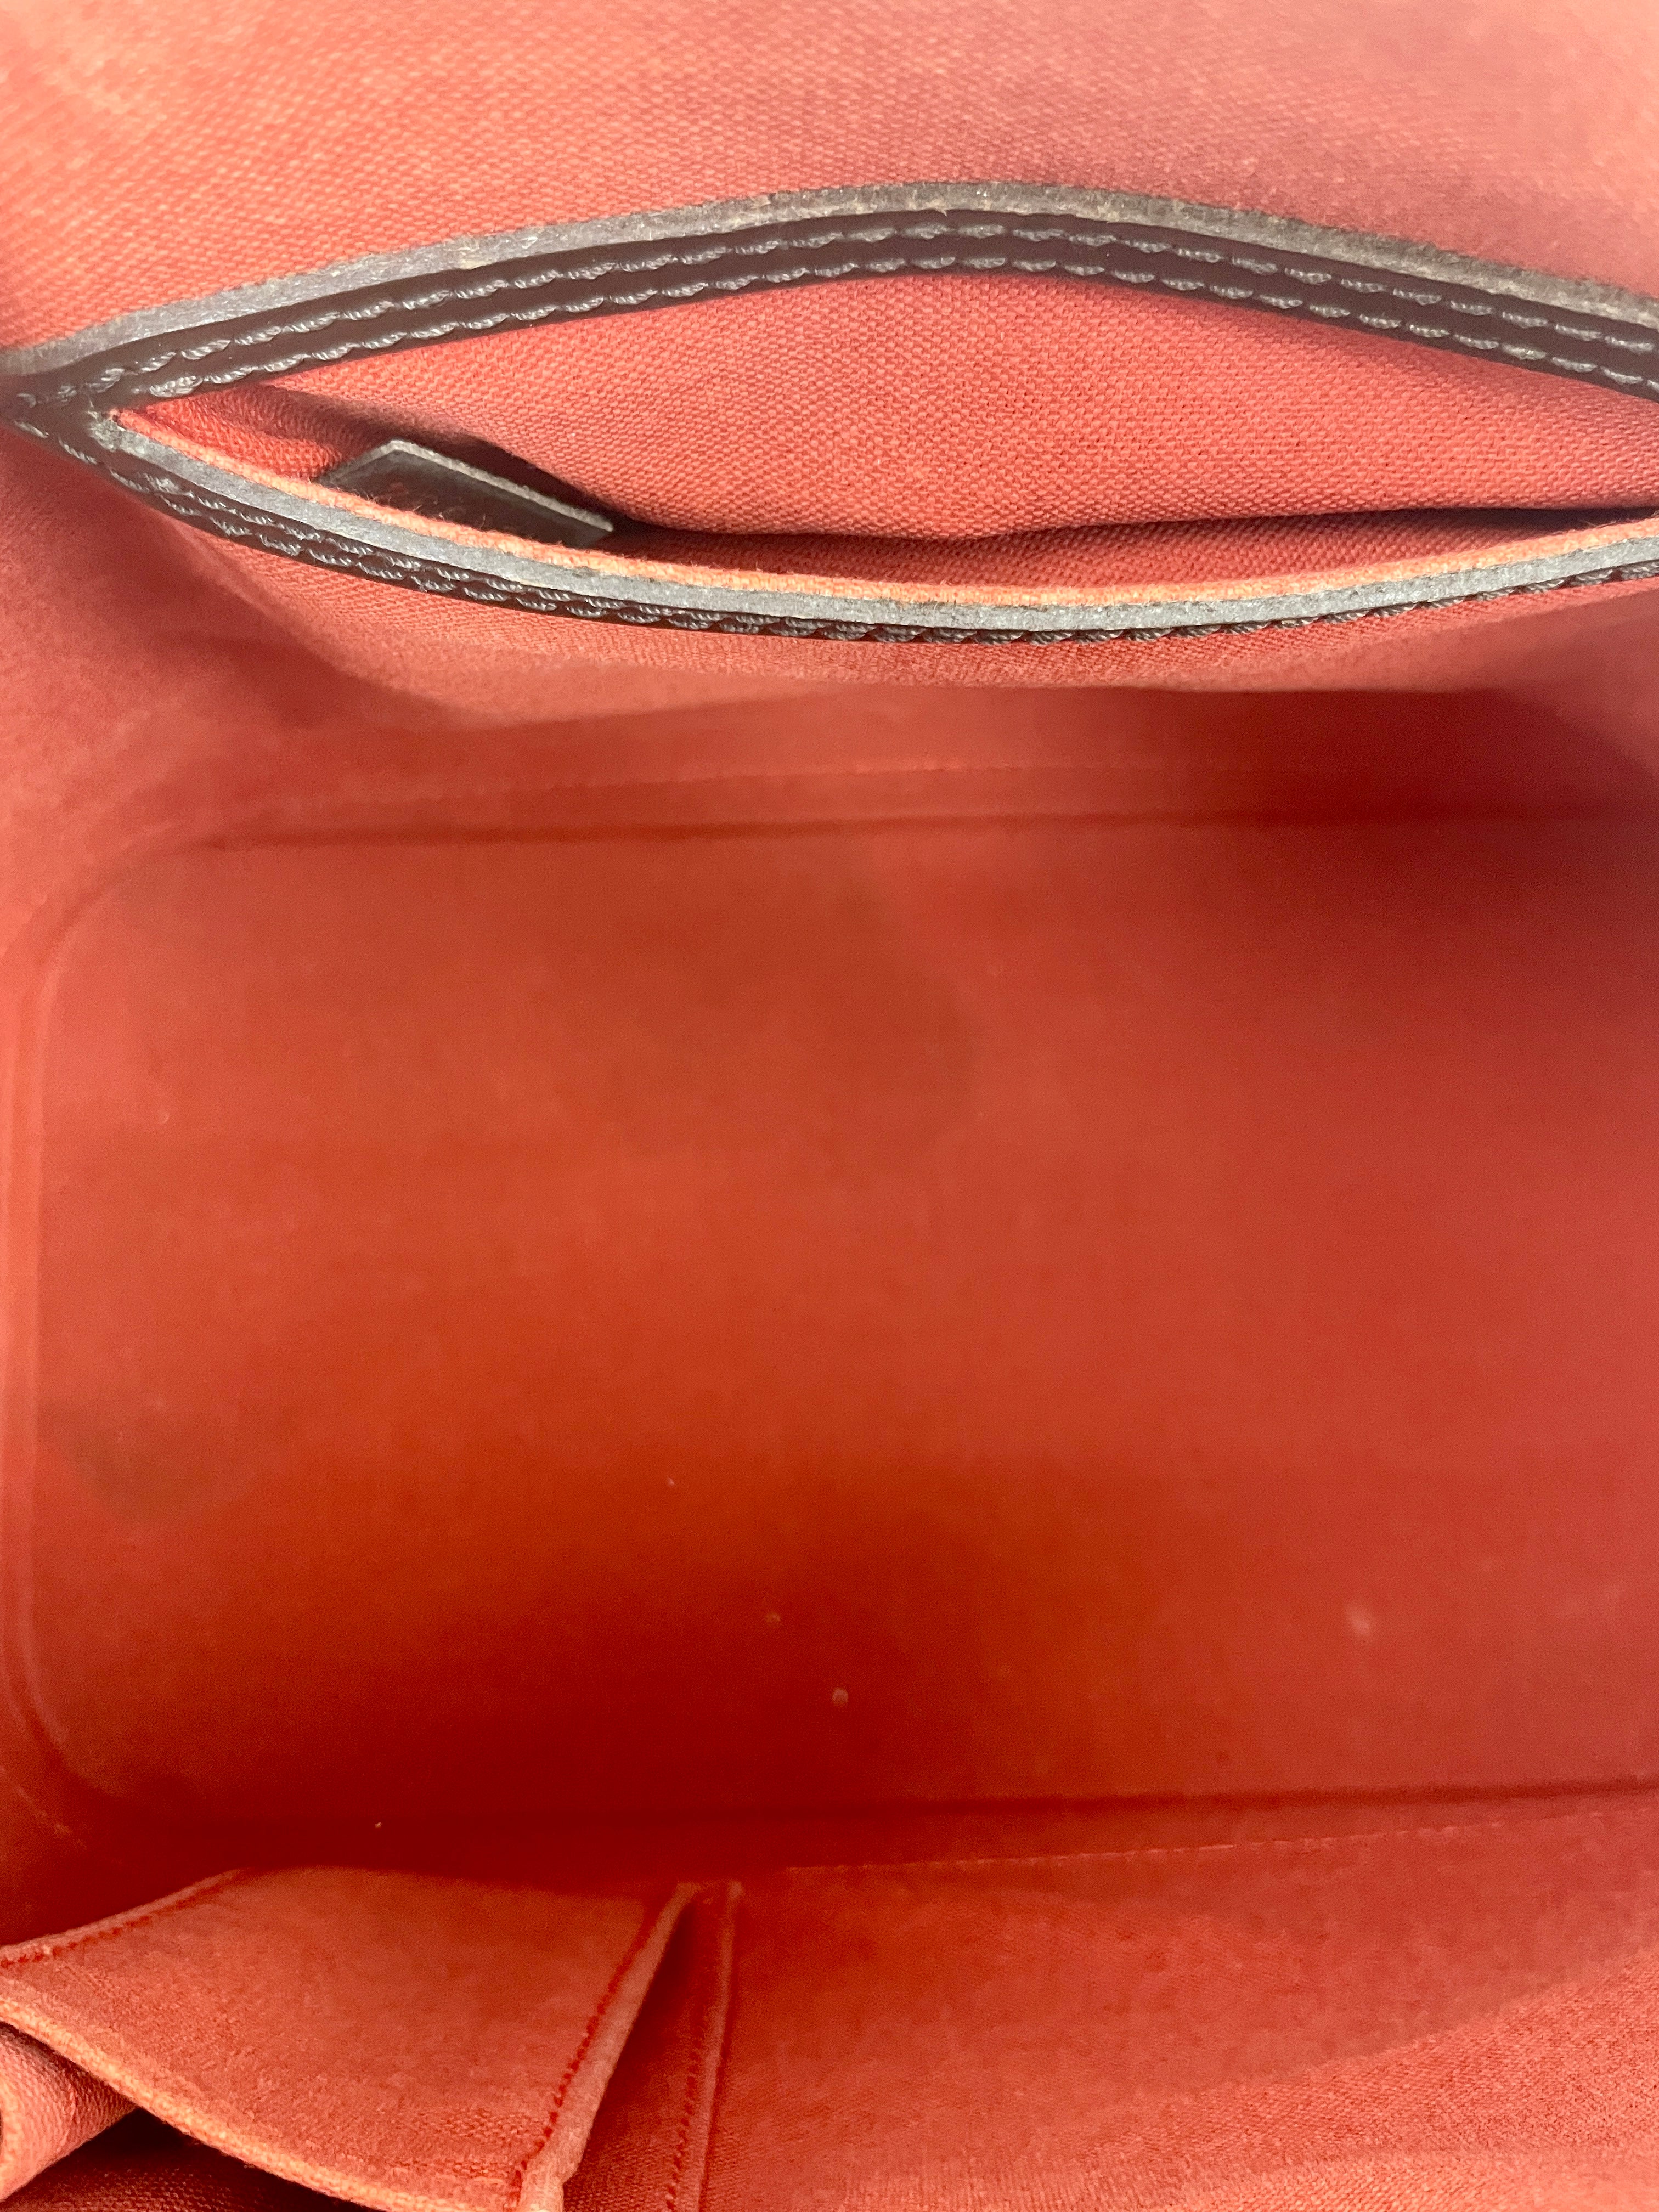 Louis Vuitton Alma PM Damier Ebene Handbag Used (6508)